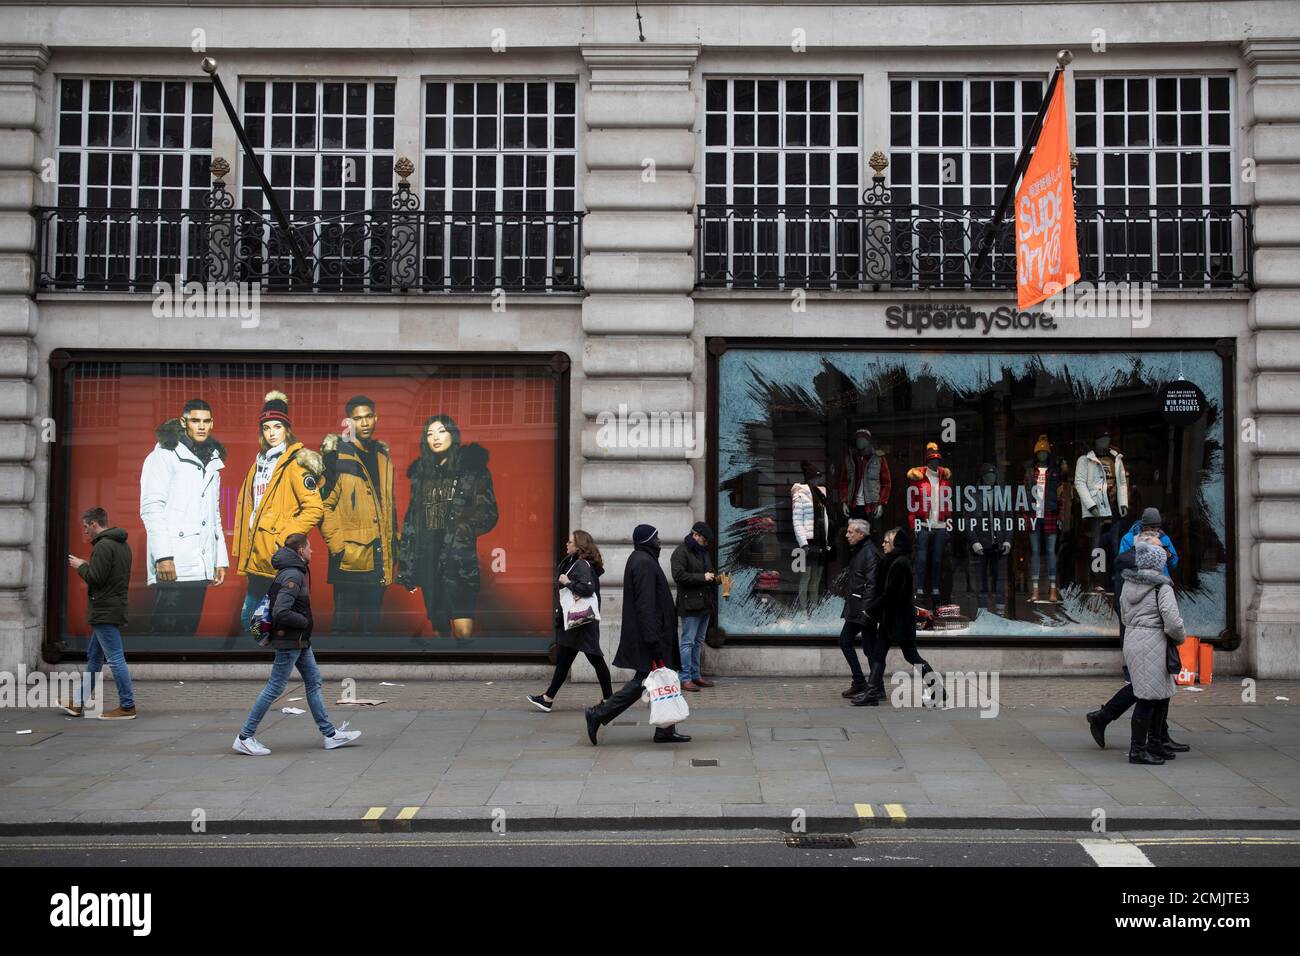 A Superdry store window display in Regent Street, London Stock Photo - Alamy